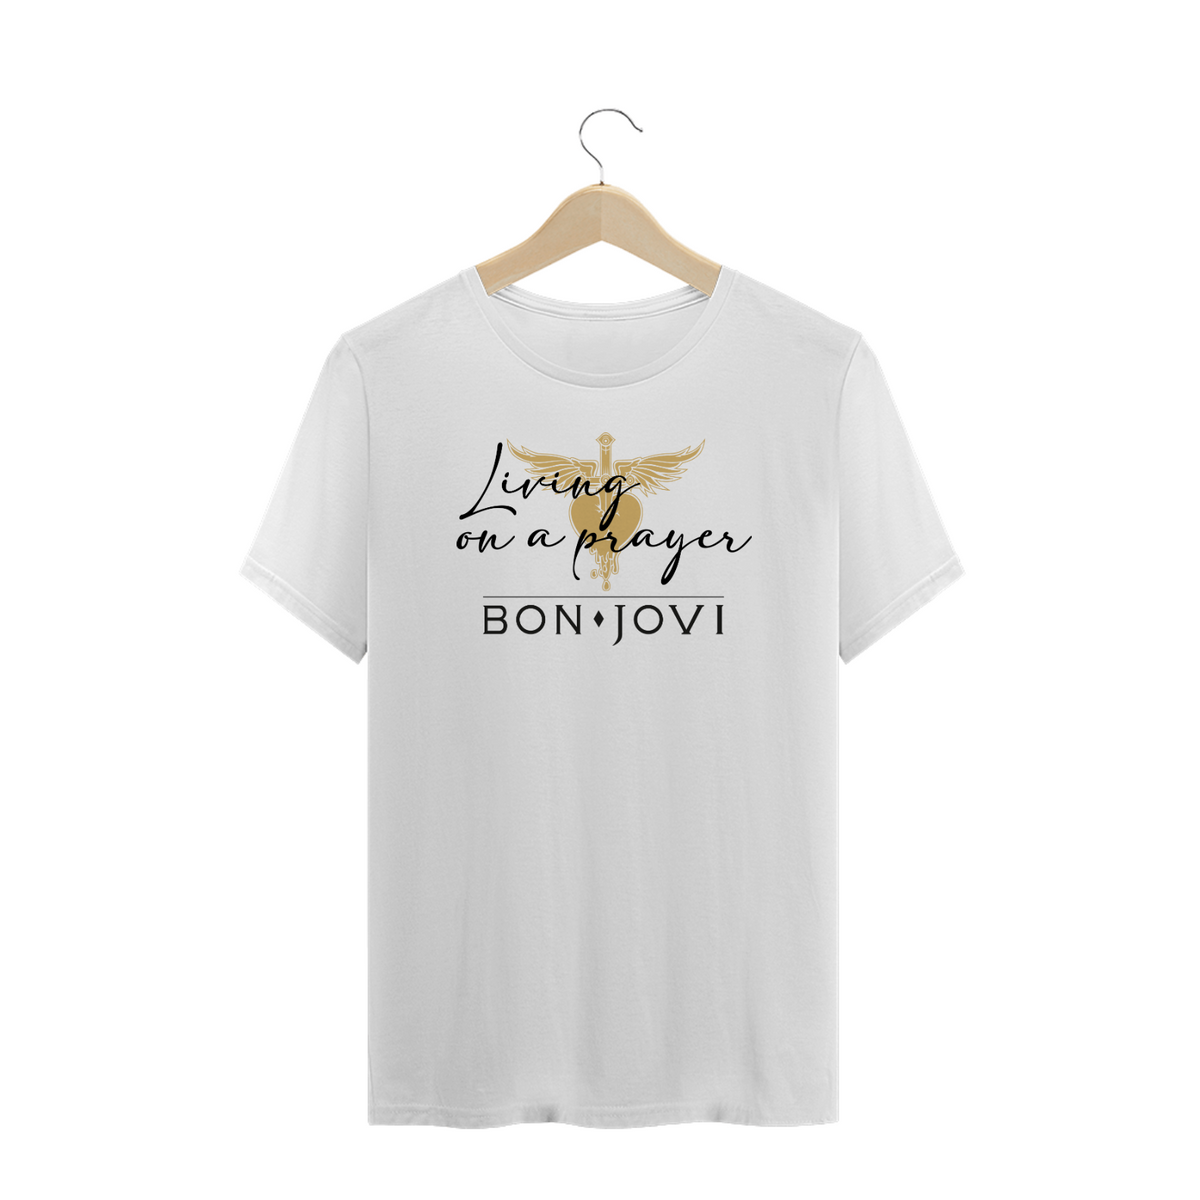 Nome do produto: Bon Jovi - Living on a Prayer